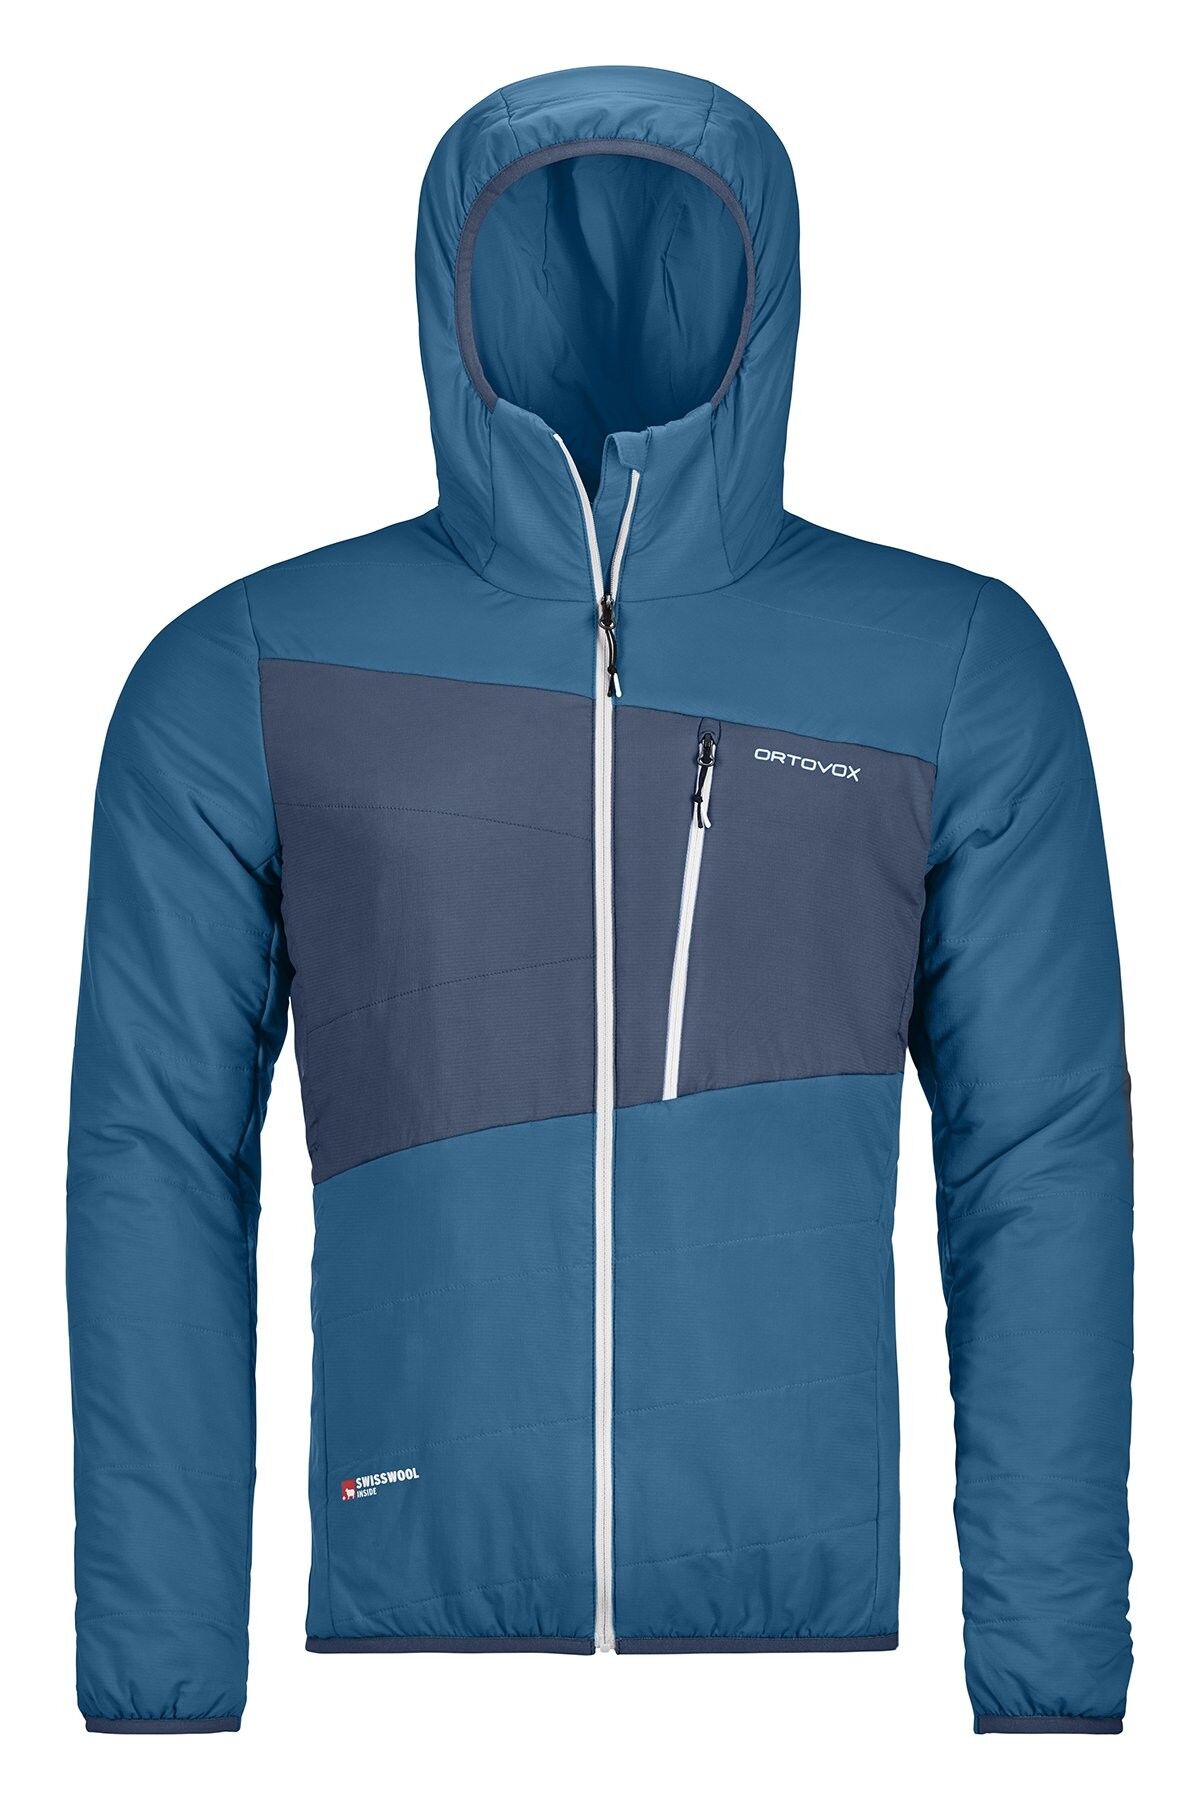 Ortovox Swisswool Zebru Jacket - Wool jacket - Men's